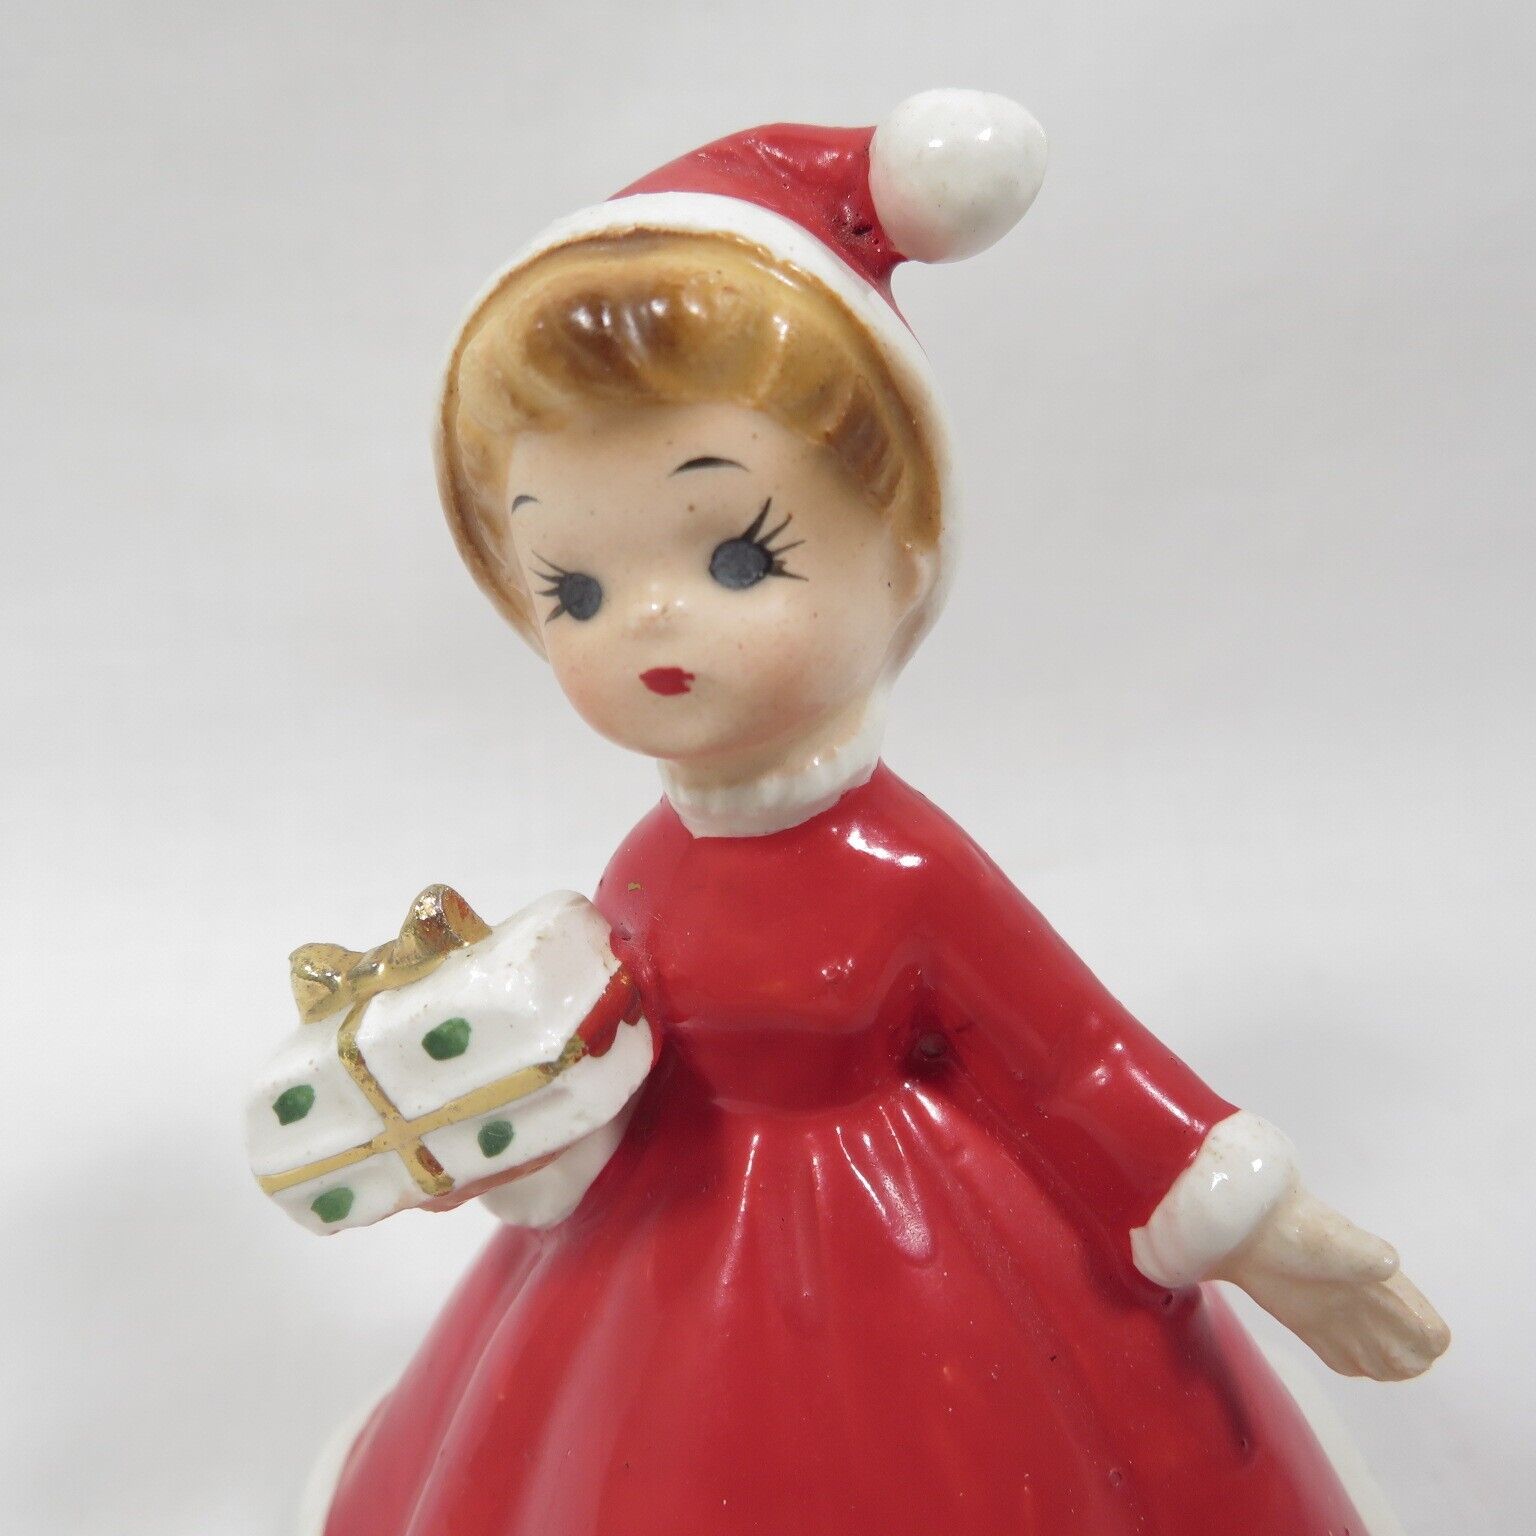 Vintage Josef Originals Christmas Girl Bell Figurine